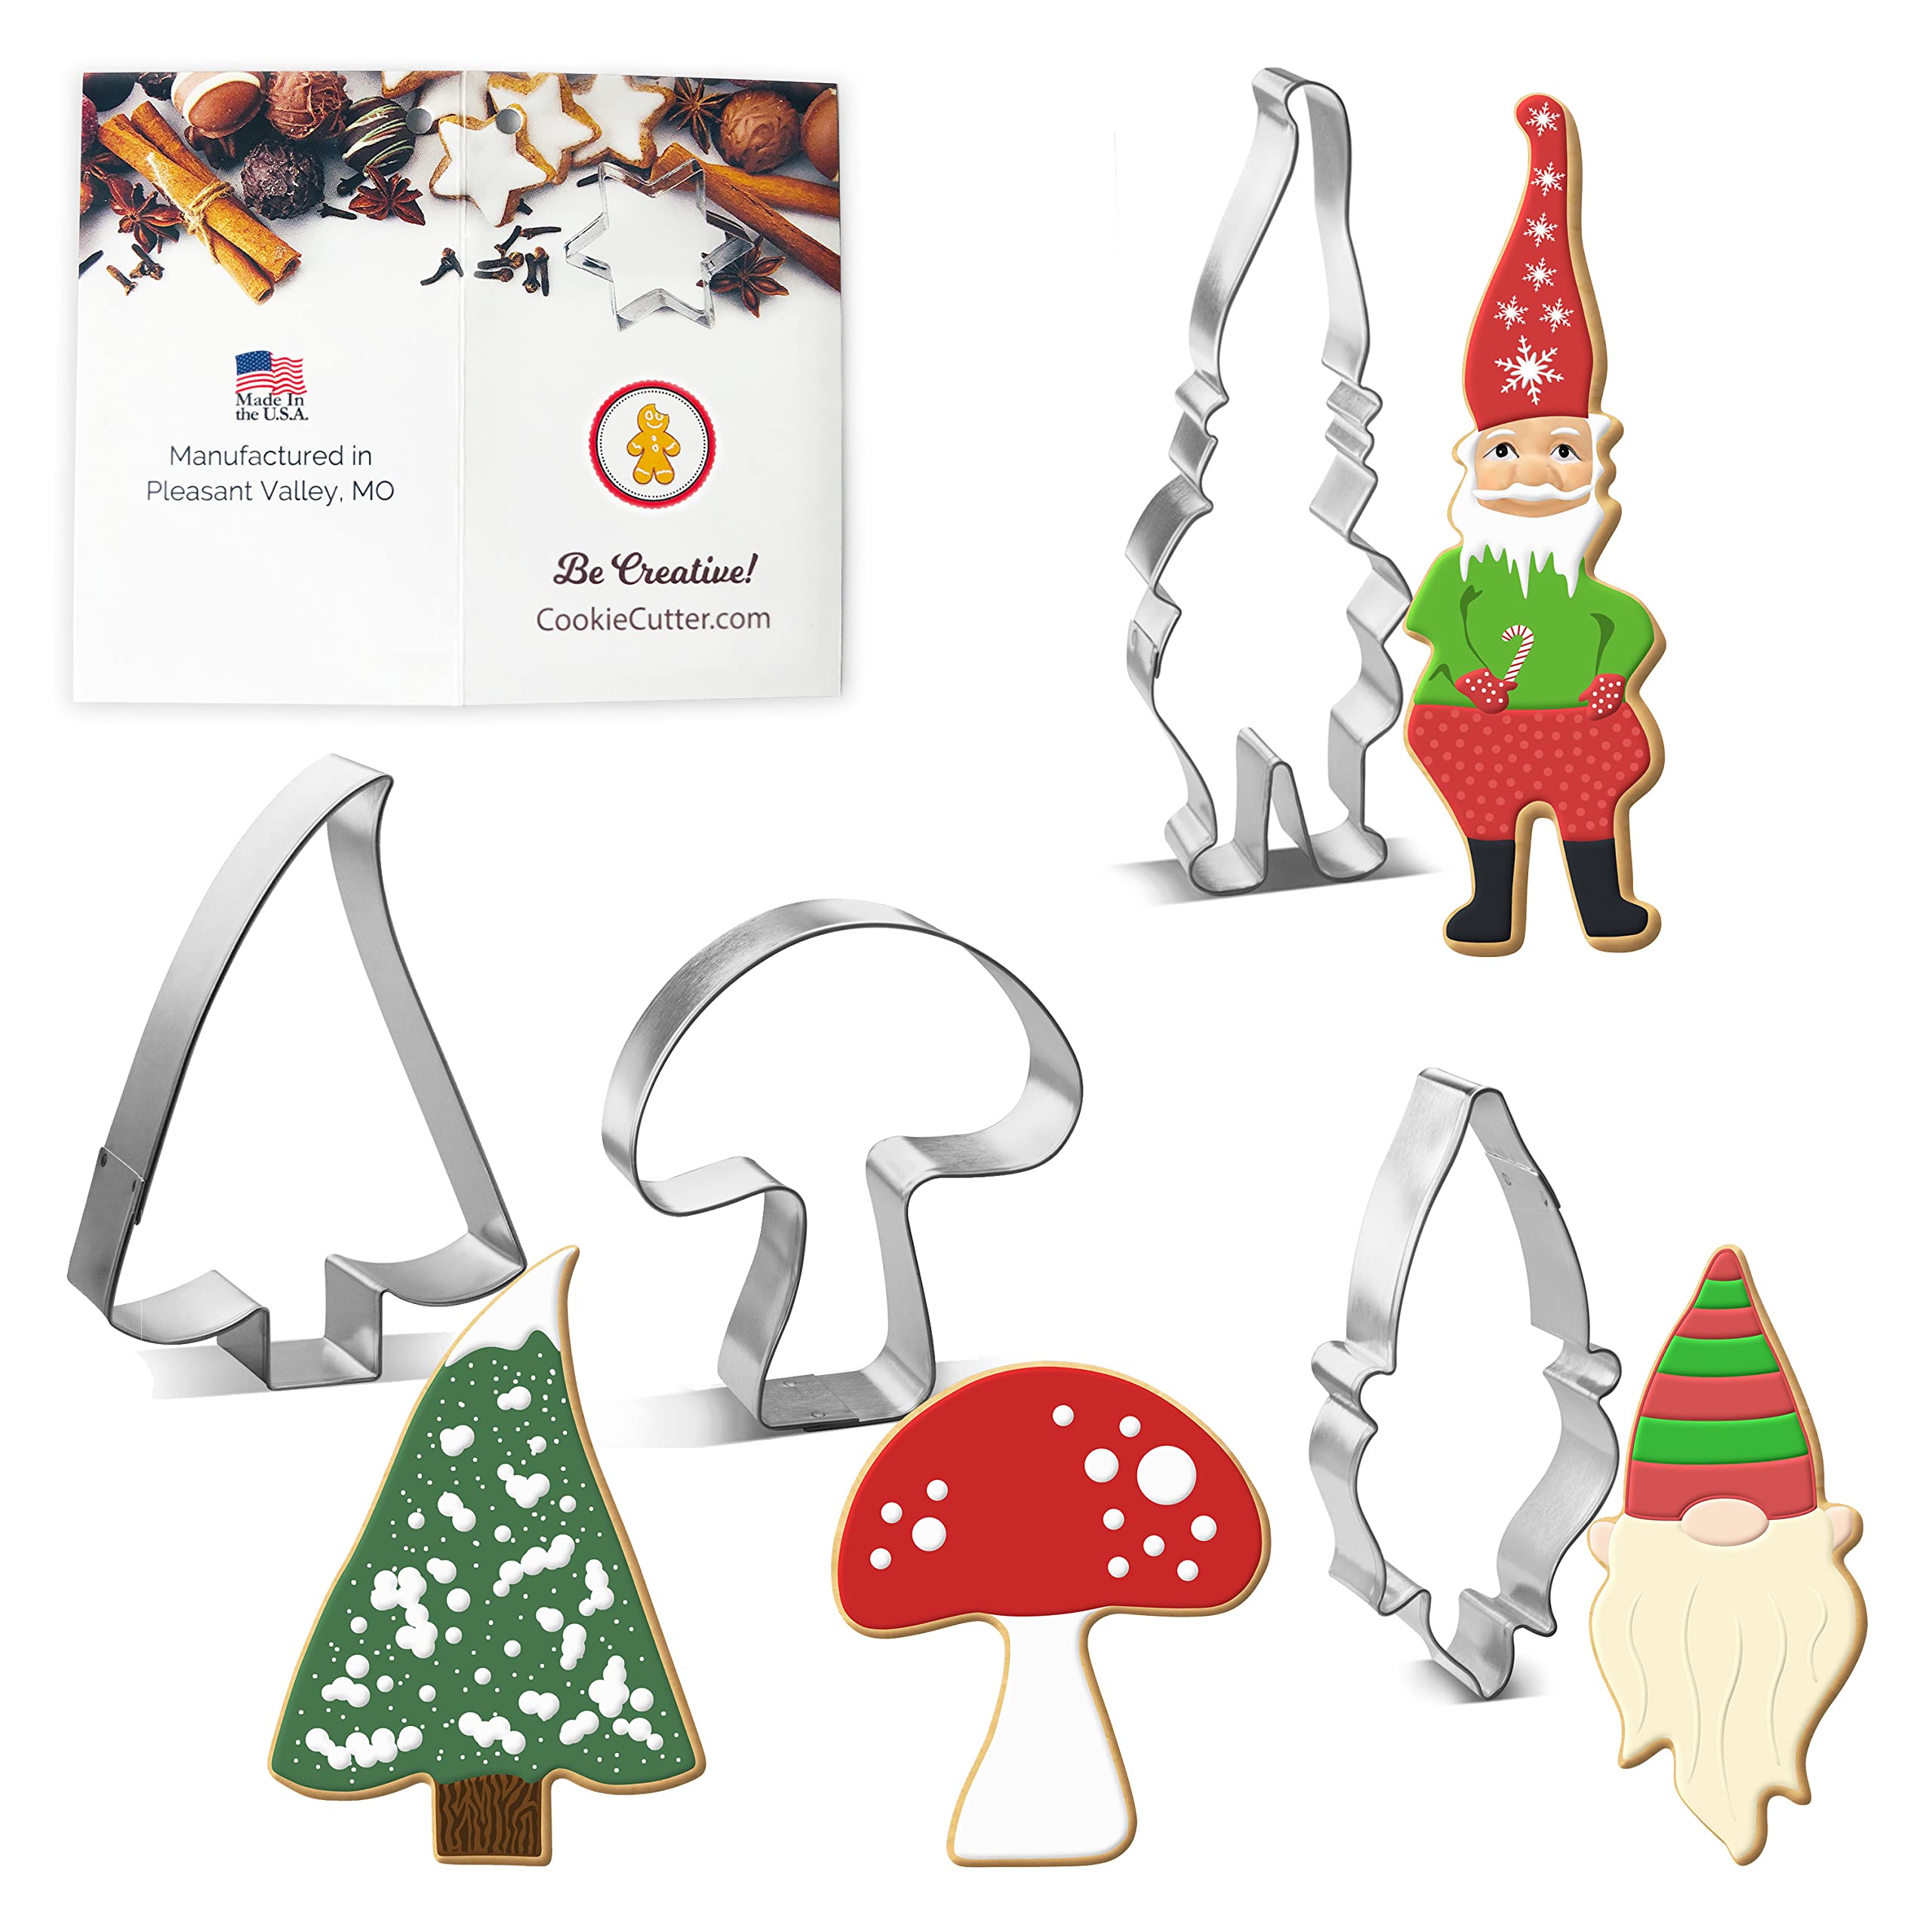 CookieCutterCom Enchanted Woodland gnome Elf cookie cutter 4 Pc Set HS0462 with Sugar cookie Recipe card Foose USA